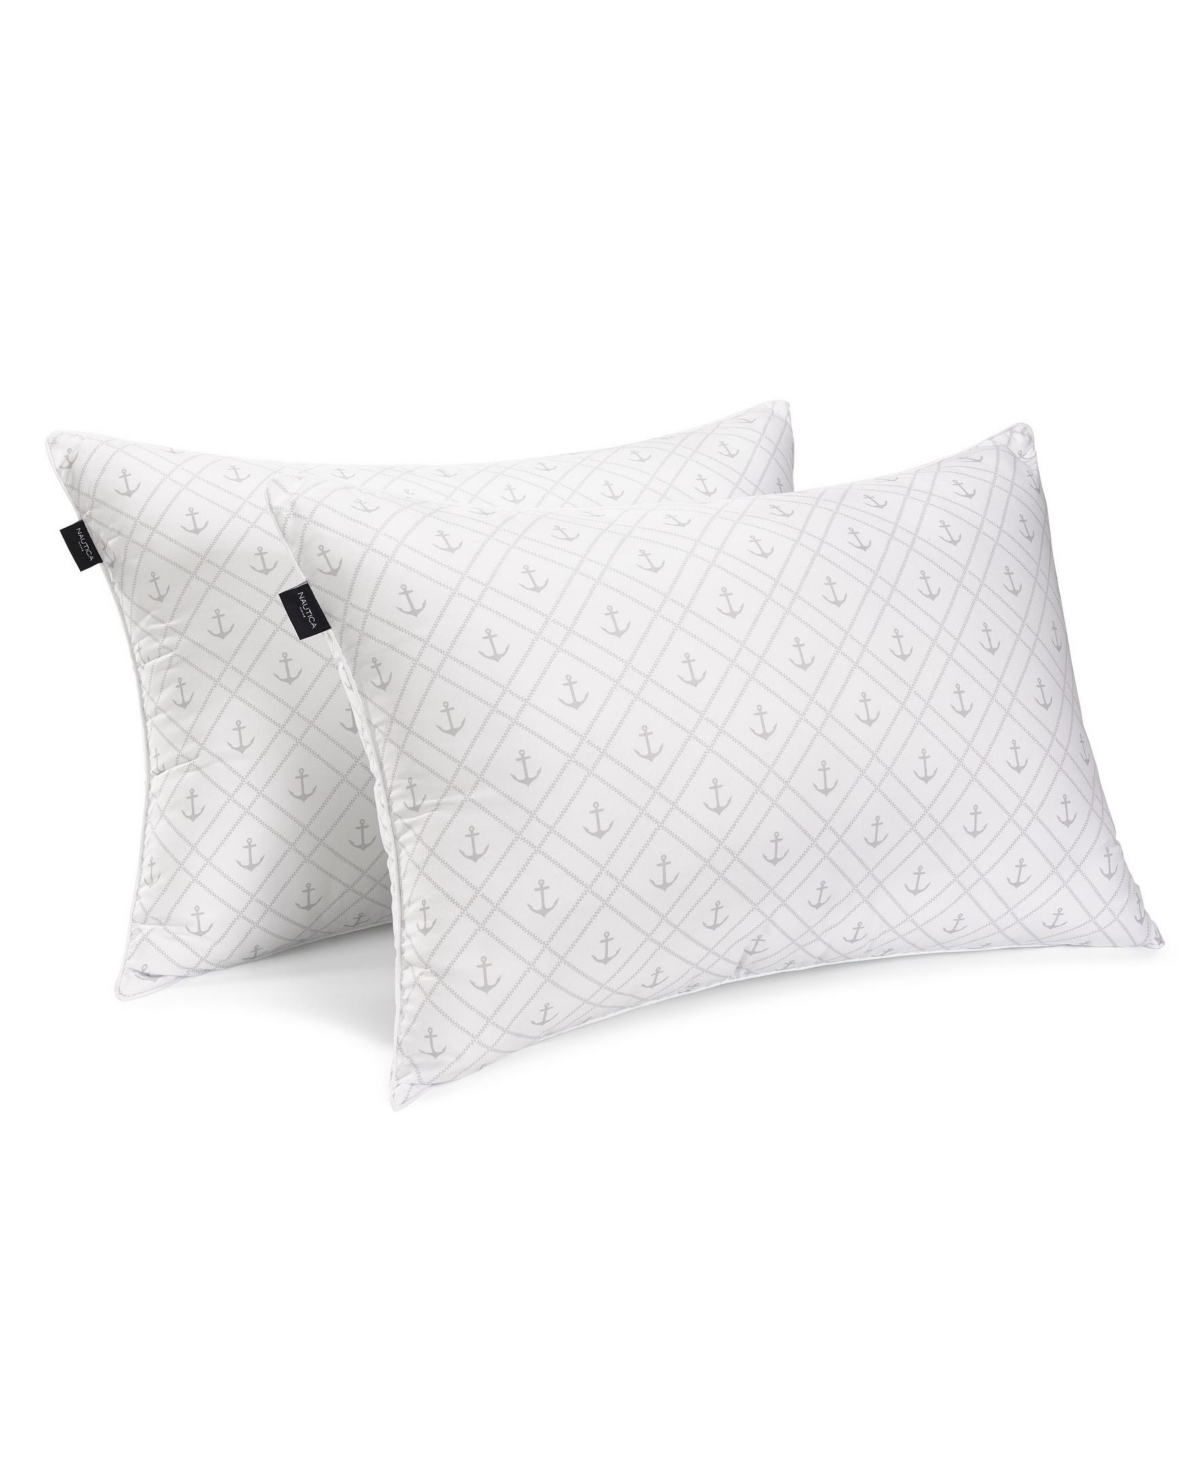 Nautica Home Sleep Max Anchor 2 Pack Pillows, Standard In White